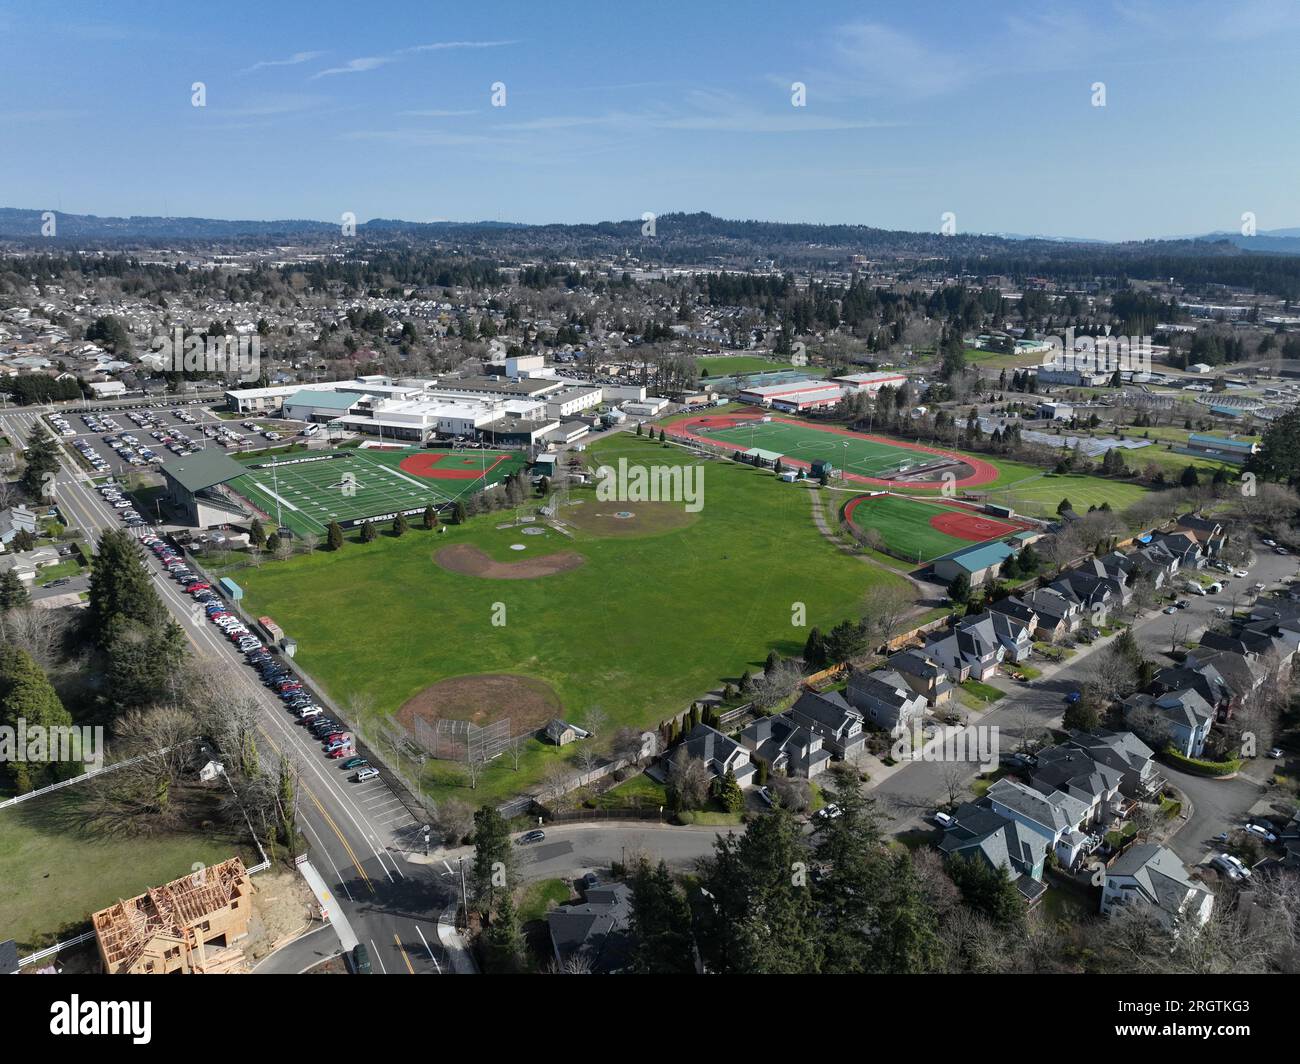 Tigard (Oregon) High School e i campi sportivi adiacenti - fotografie aeree. Foto Stock